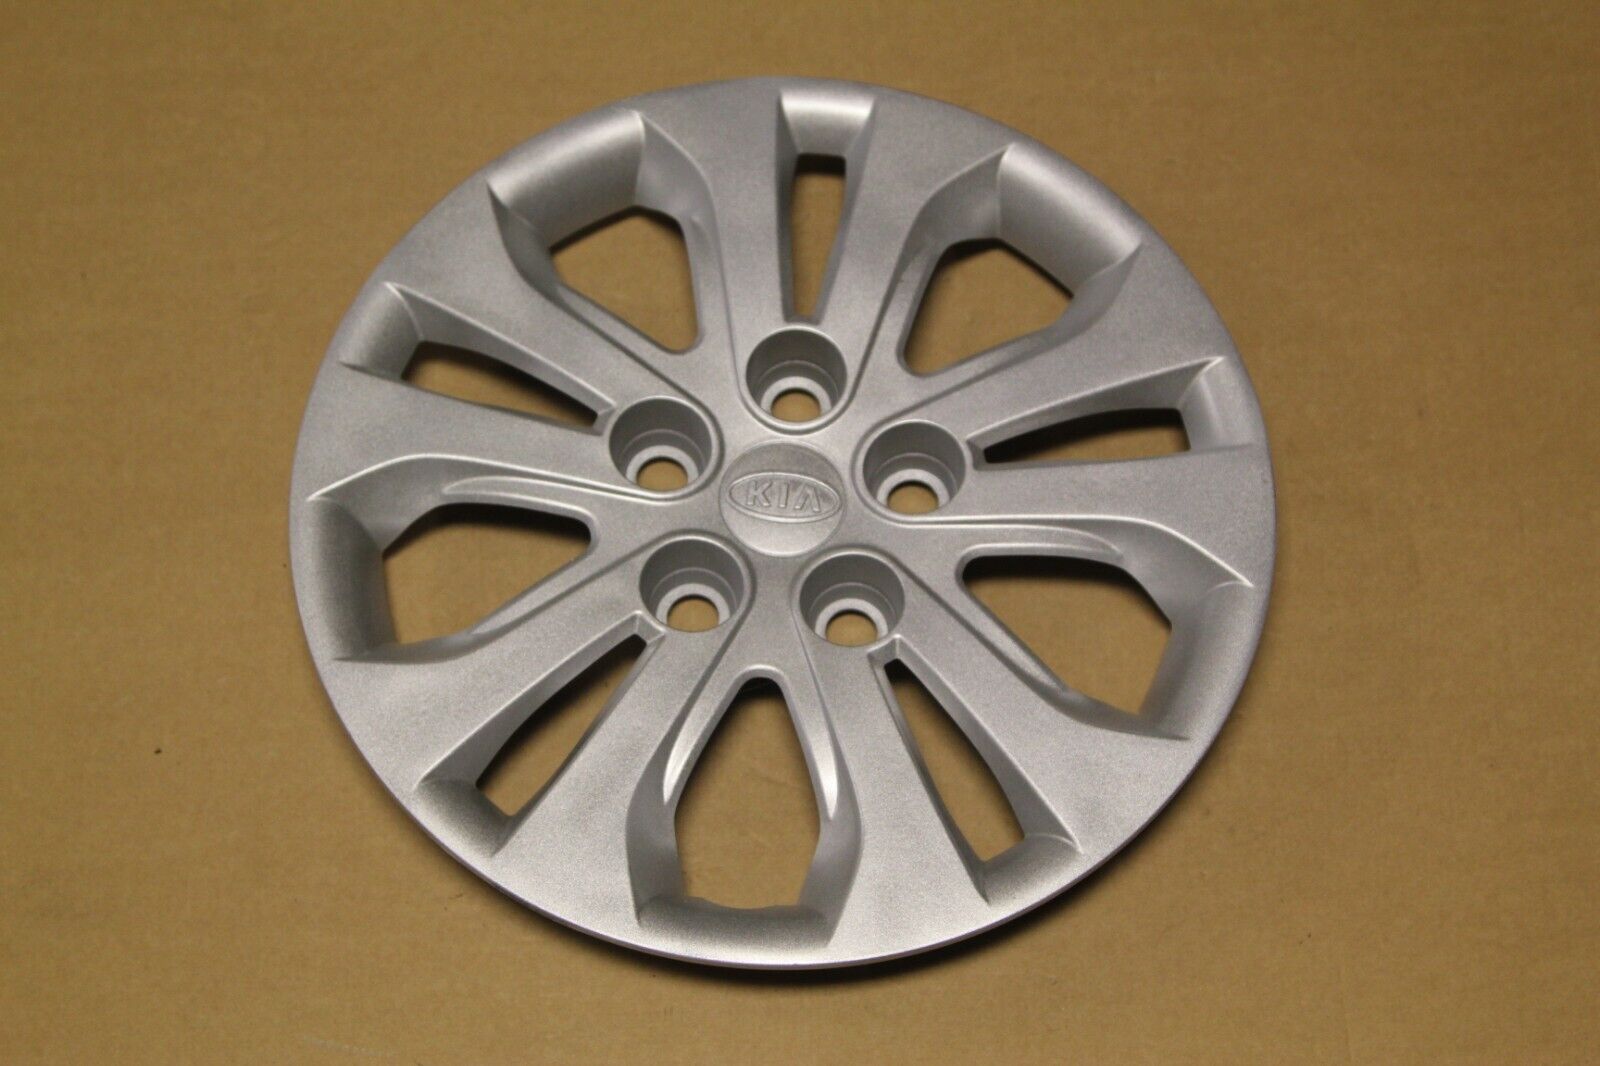 2010-2013 KIA FORTE 15” wheel cover hub cap 66021 P/N 52960-1M000